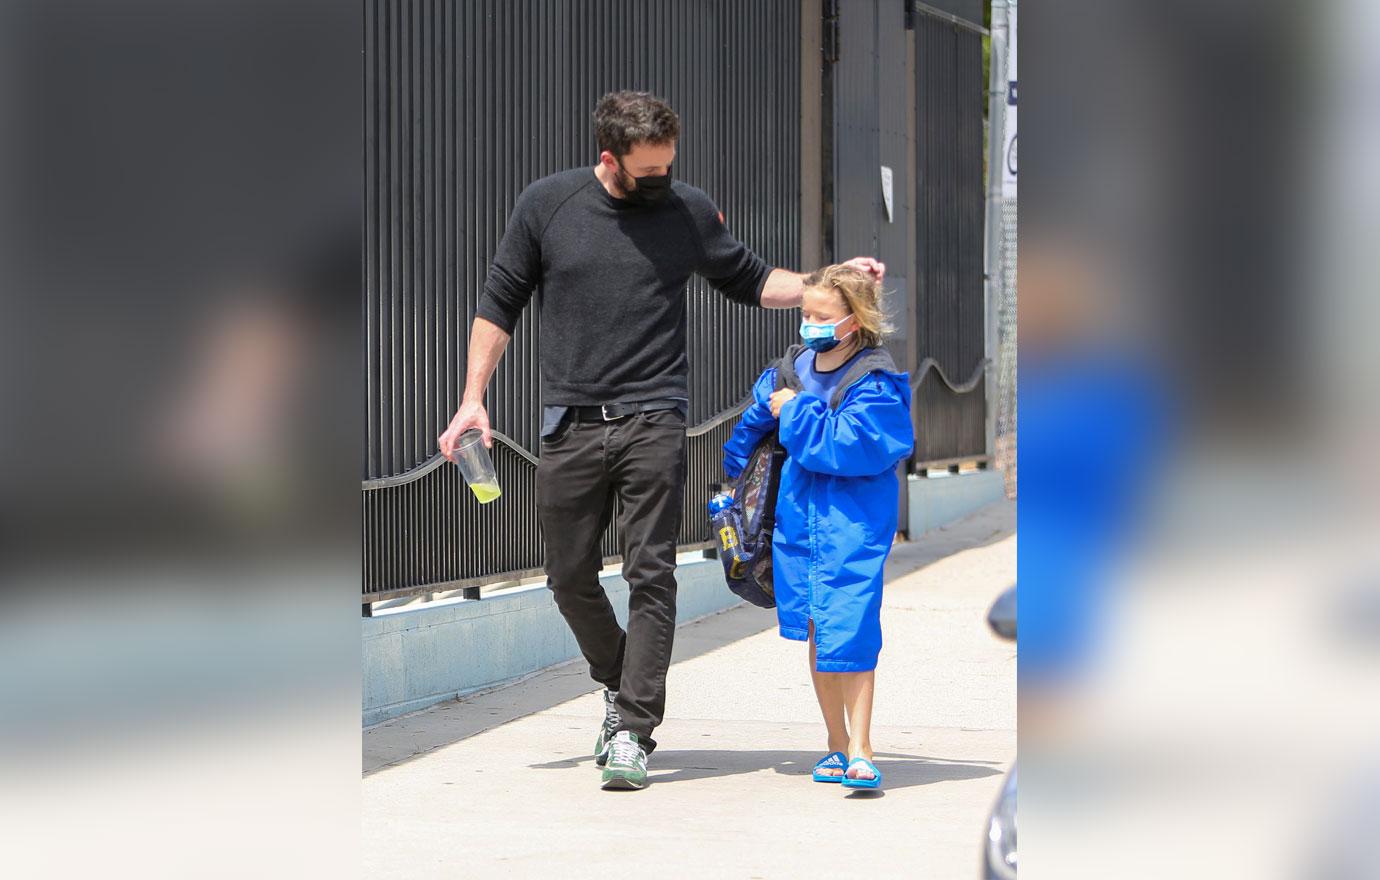 Ben Affleck And Jennifer Garner Reunite To Watch Son Samuel Swim: Photos